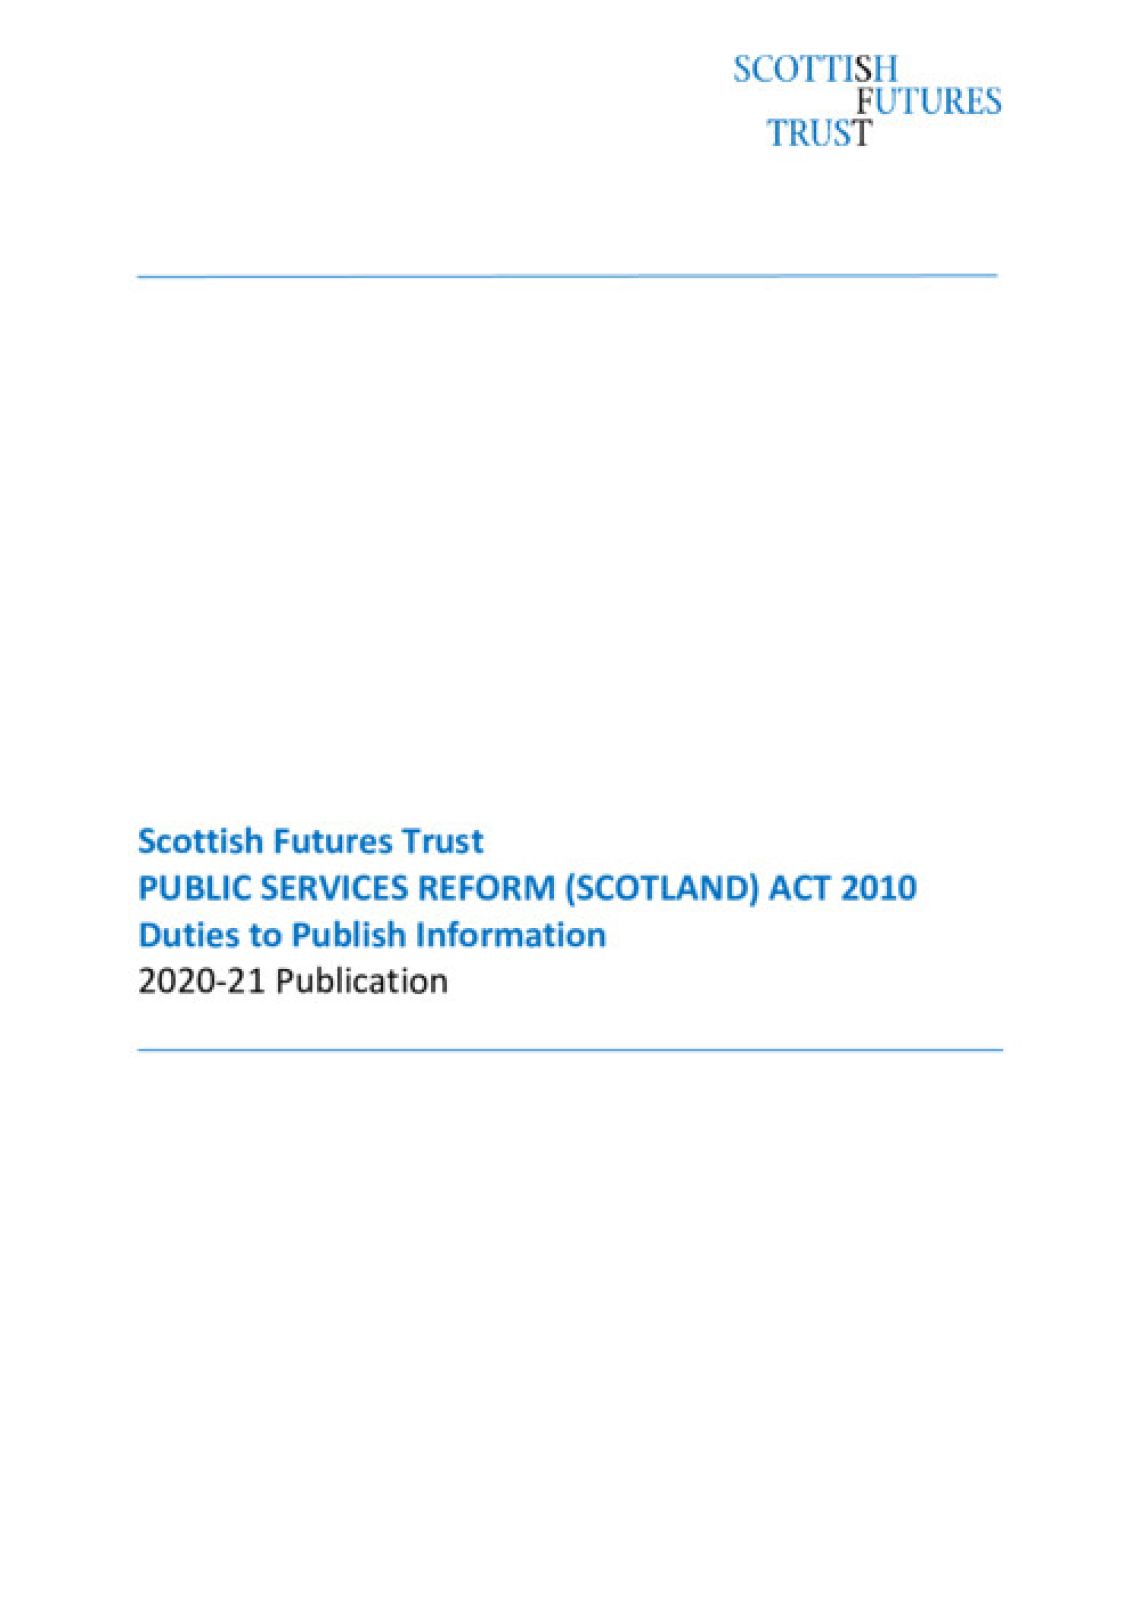 SFT PSRA Publication 2020 - 2021 cover